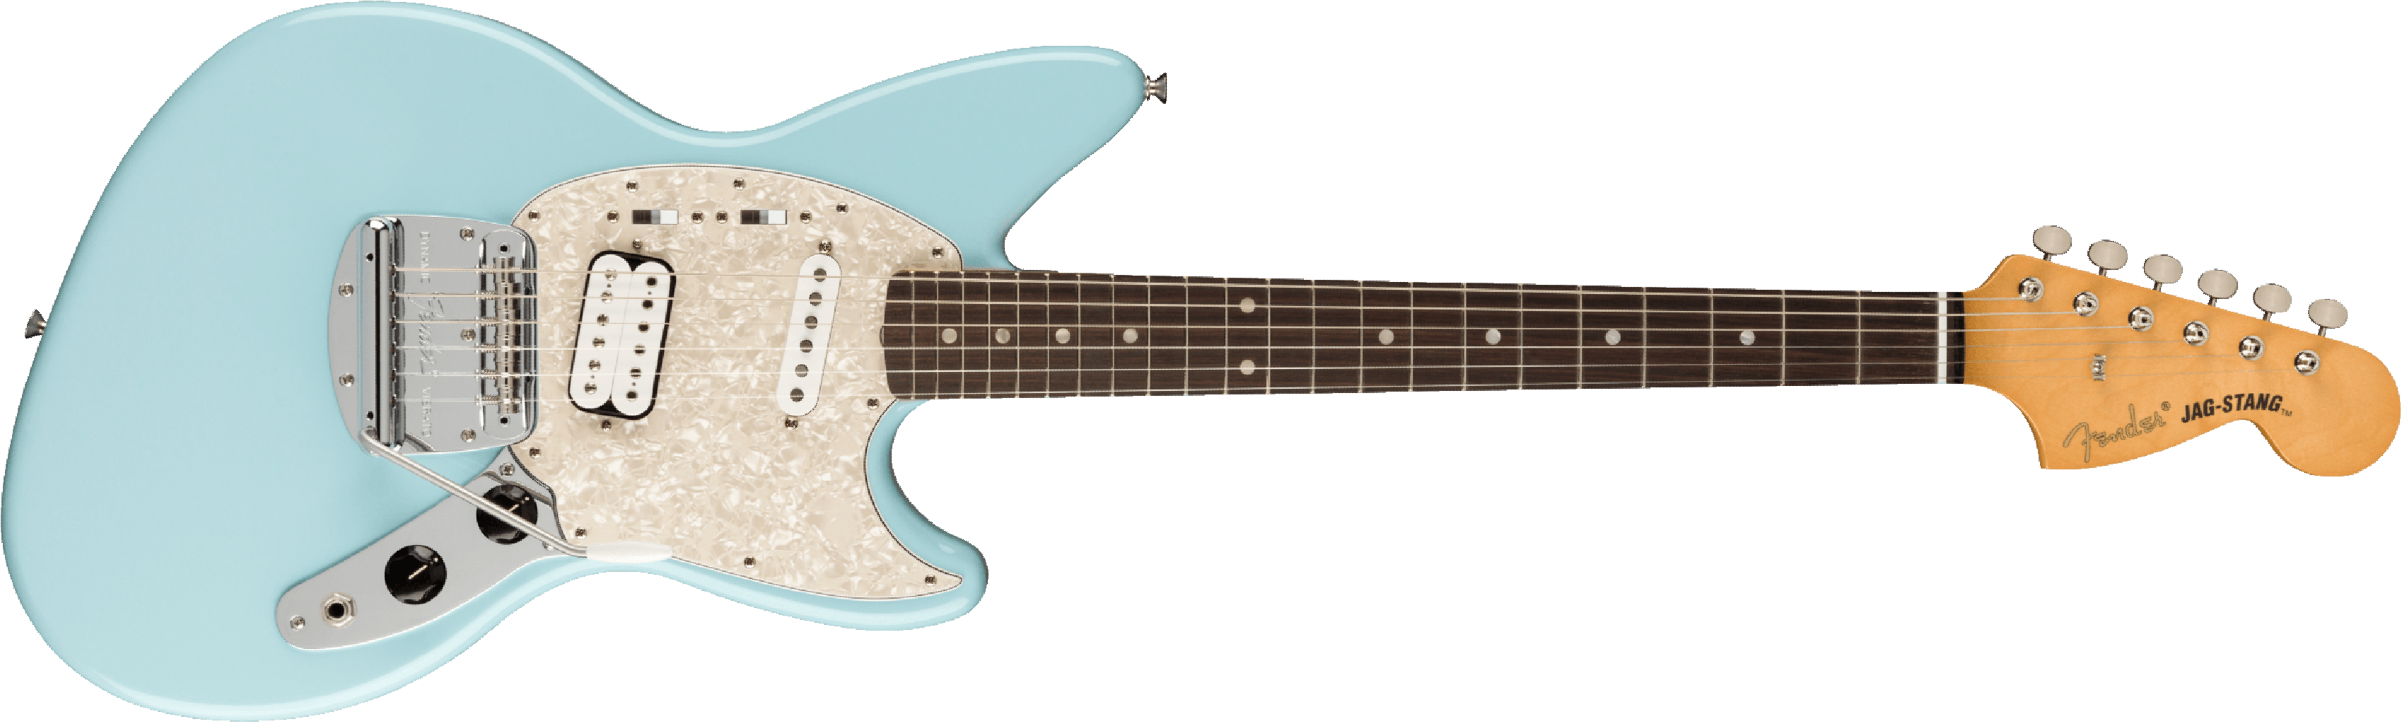 Fender Jag-stang Kurt Cobain Artist Hs Trem Rw - Sonic Blue - Guitarra electrica retro rock - Main picture